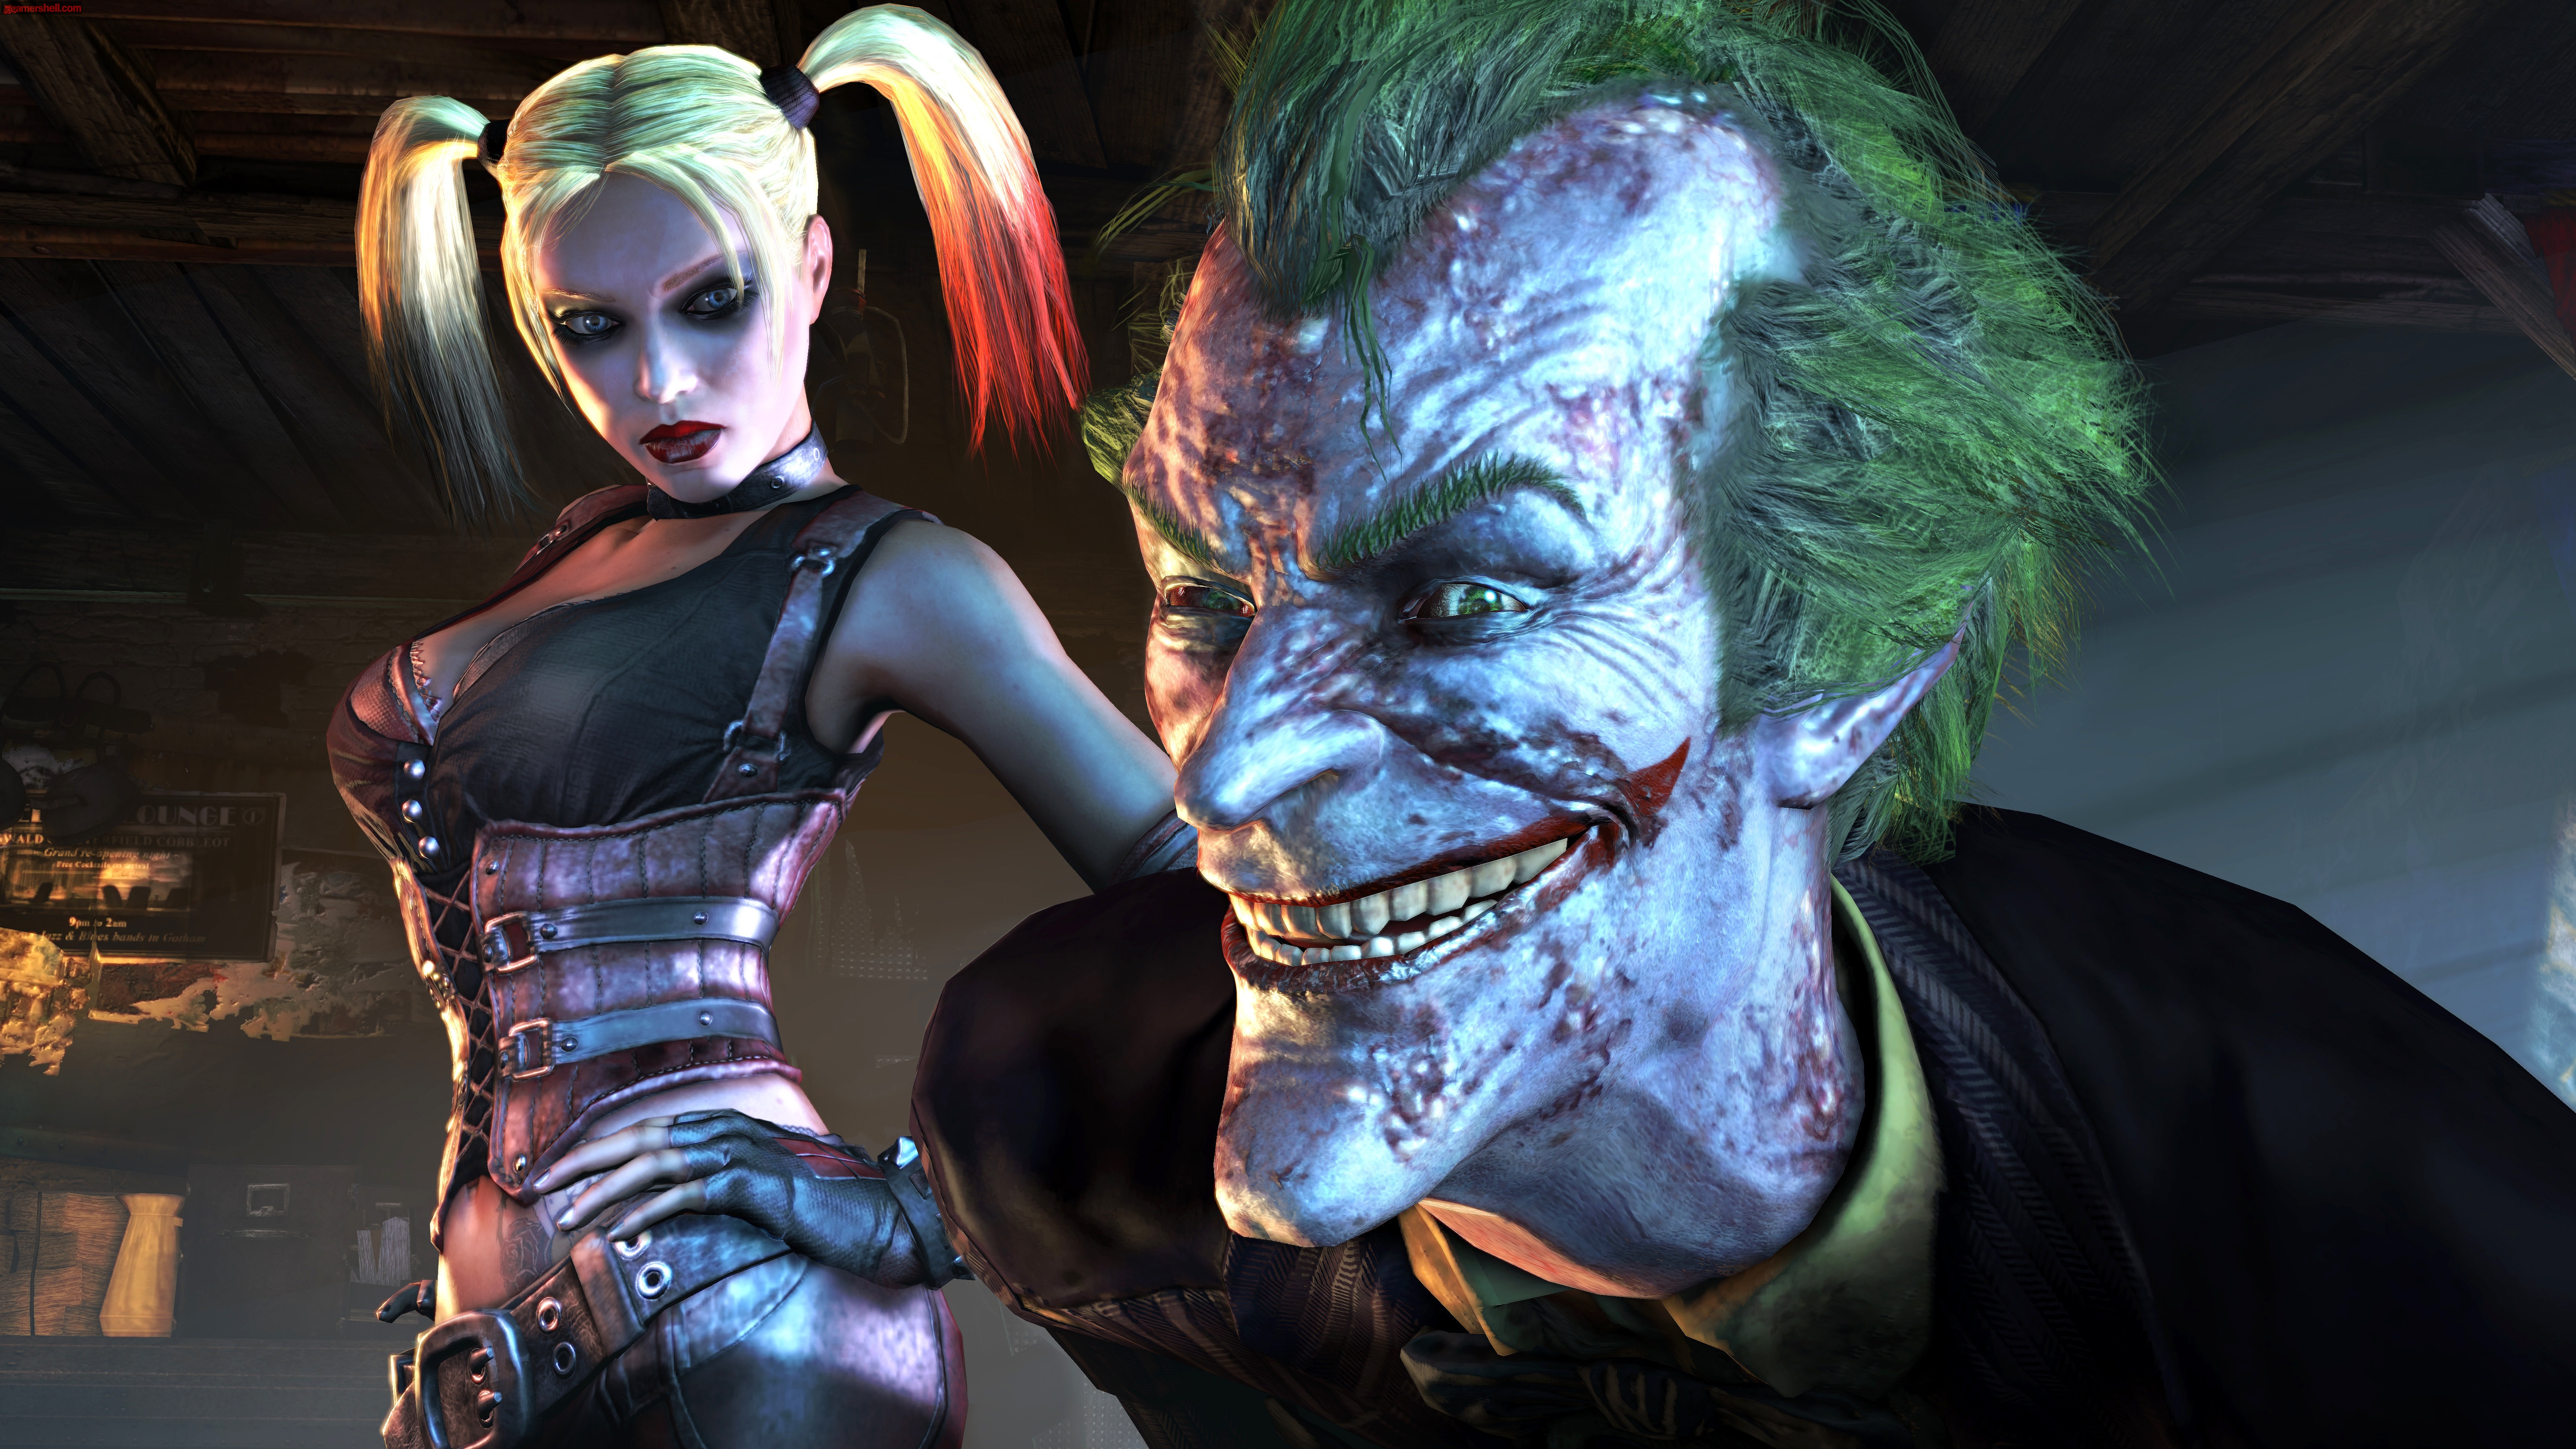 Harley Quinn vs Joker wallpaper APK pour Android Télécharger